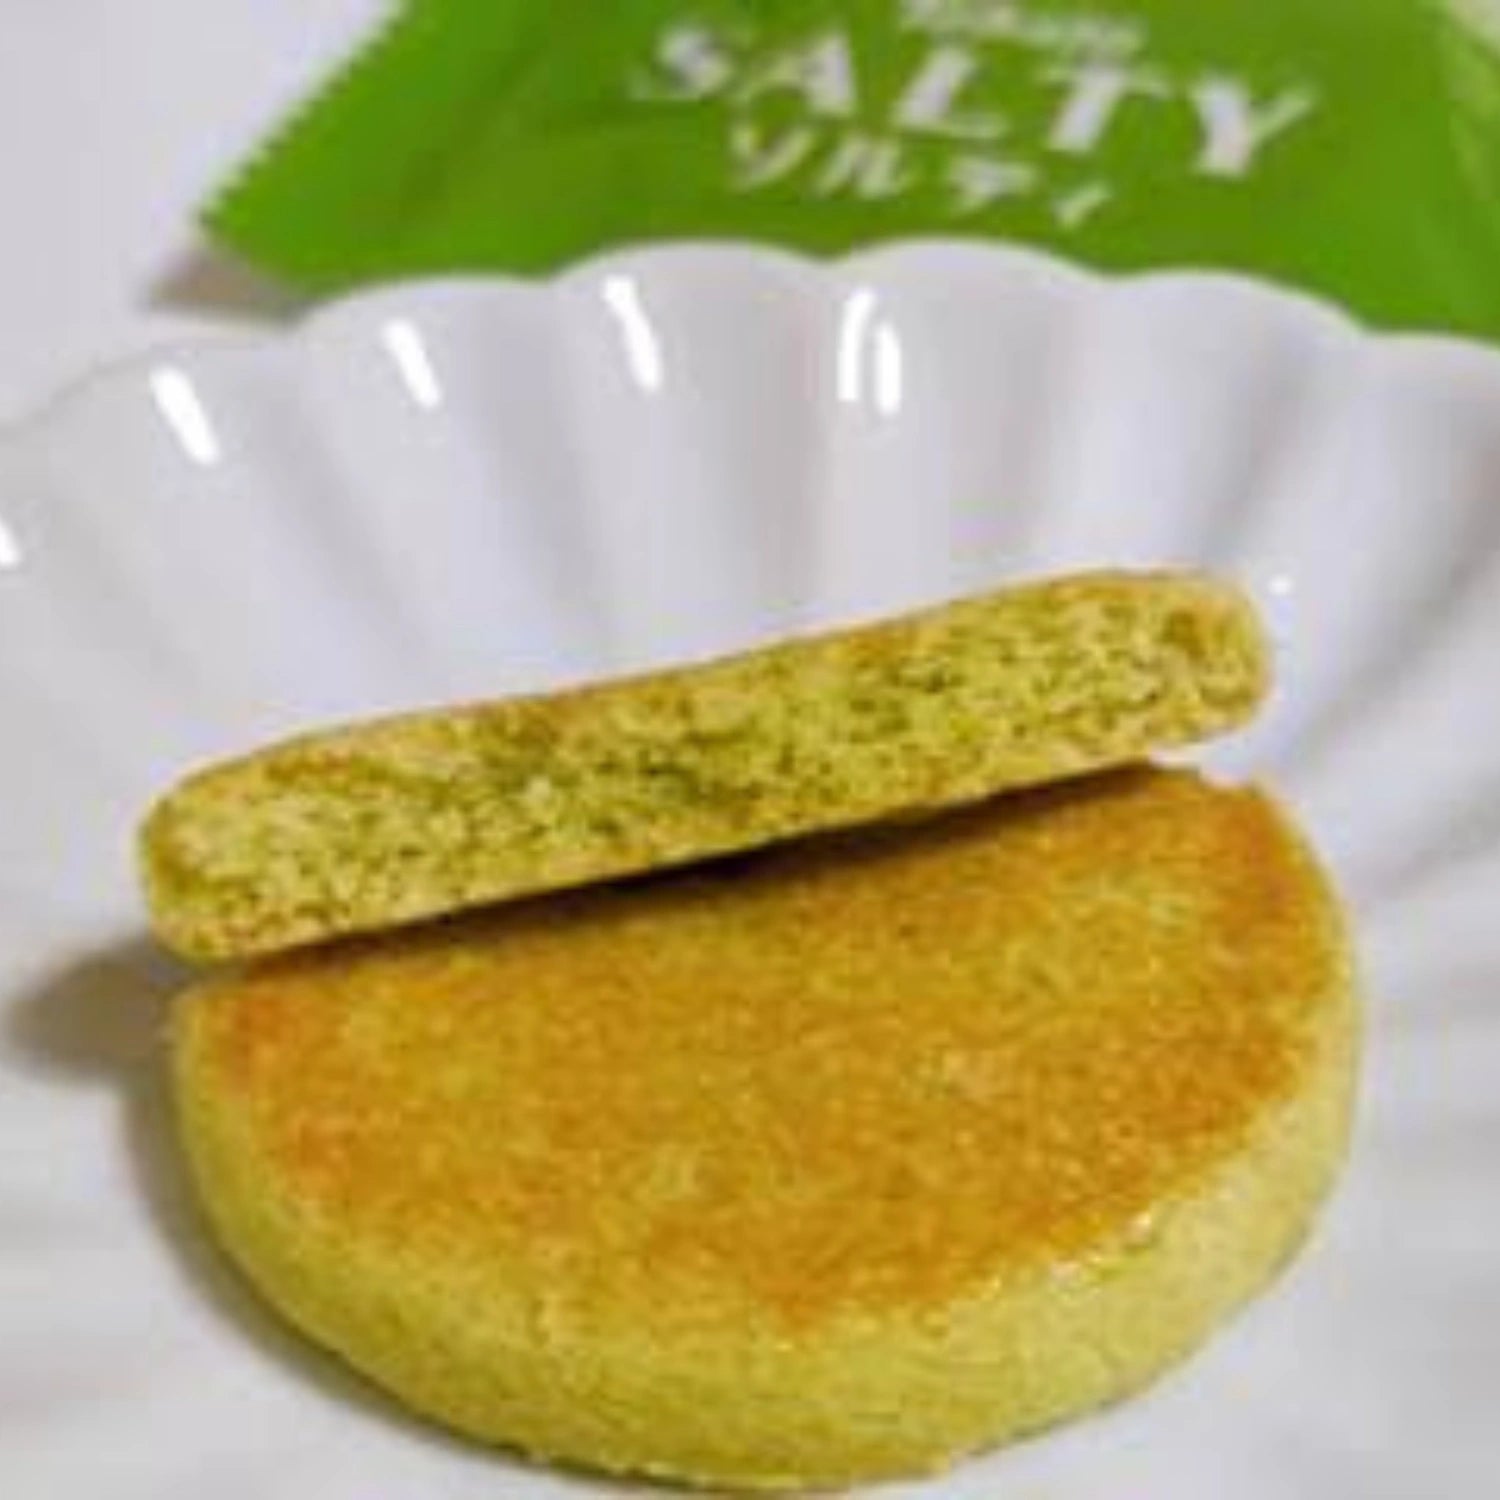 Tohato Salty Uji Matcha Cookies (8 Units) - Buy Me Japan